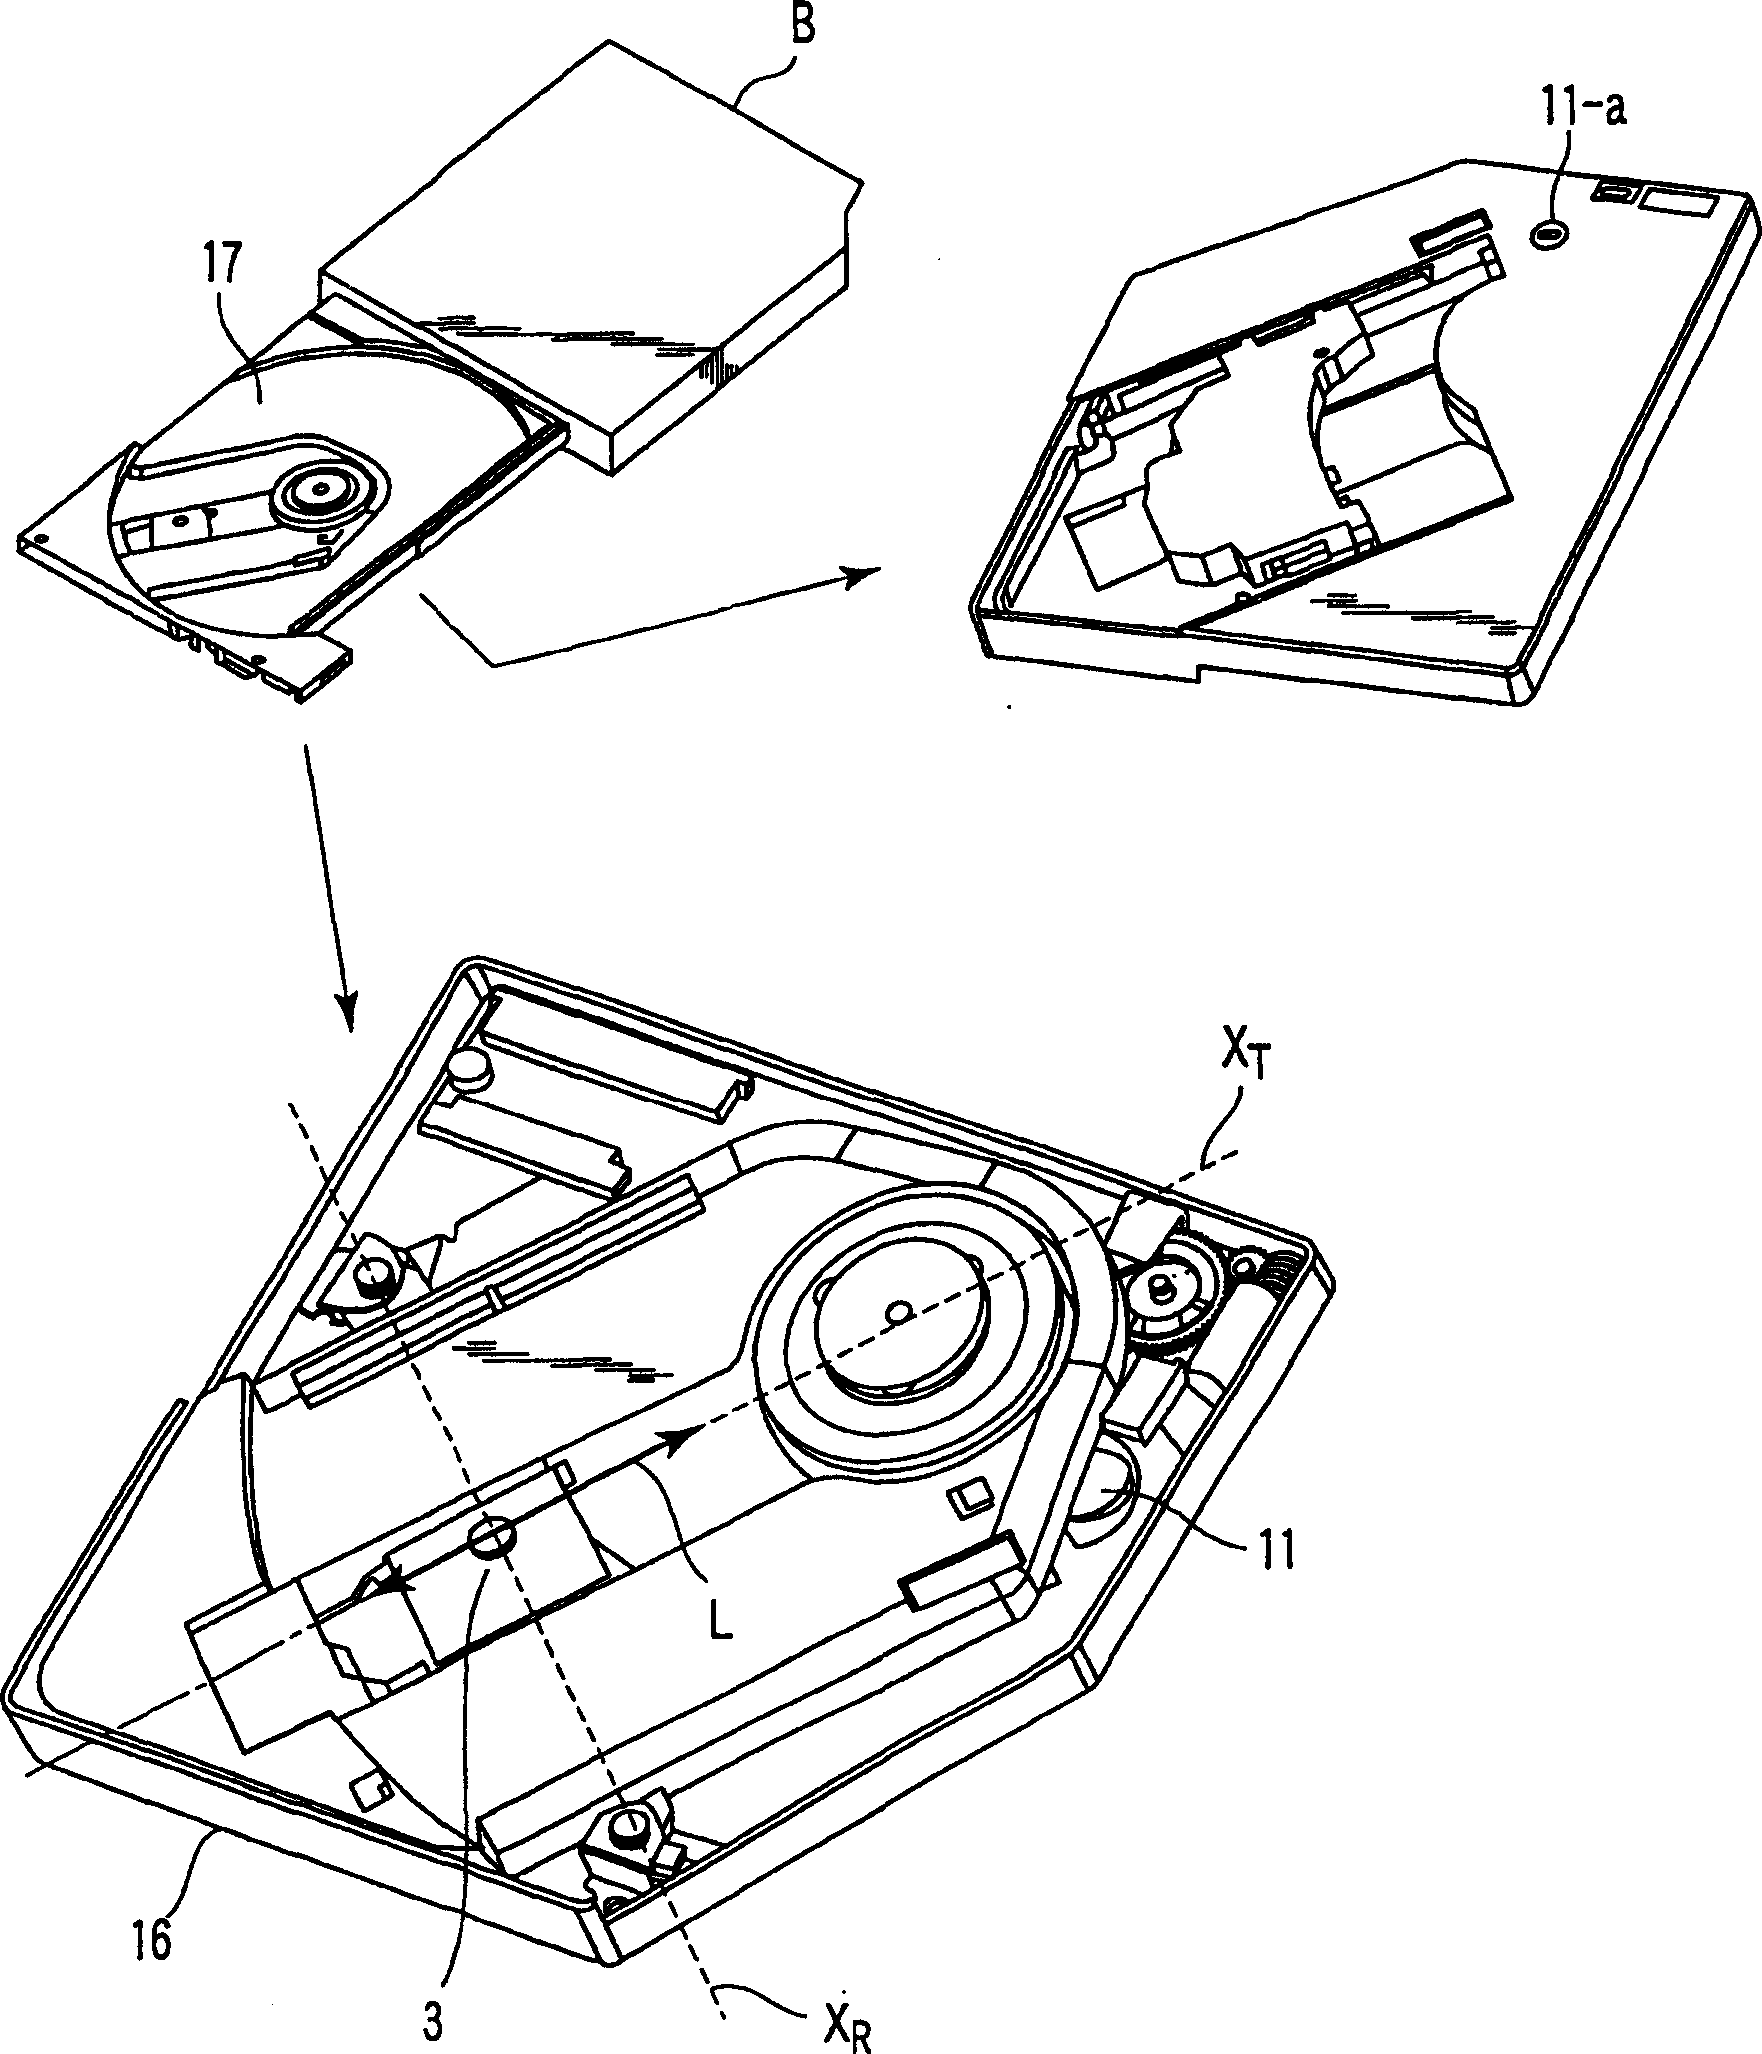 Optical disk apparatus